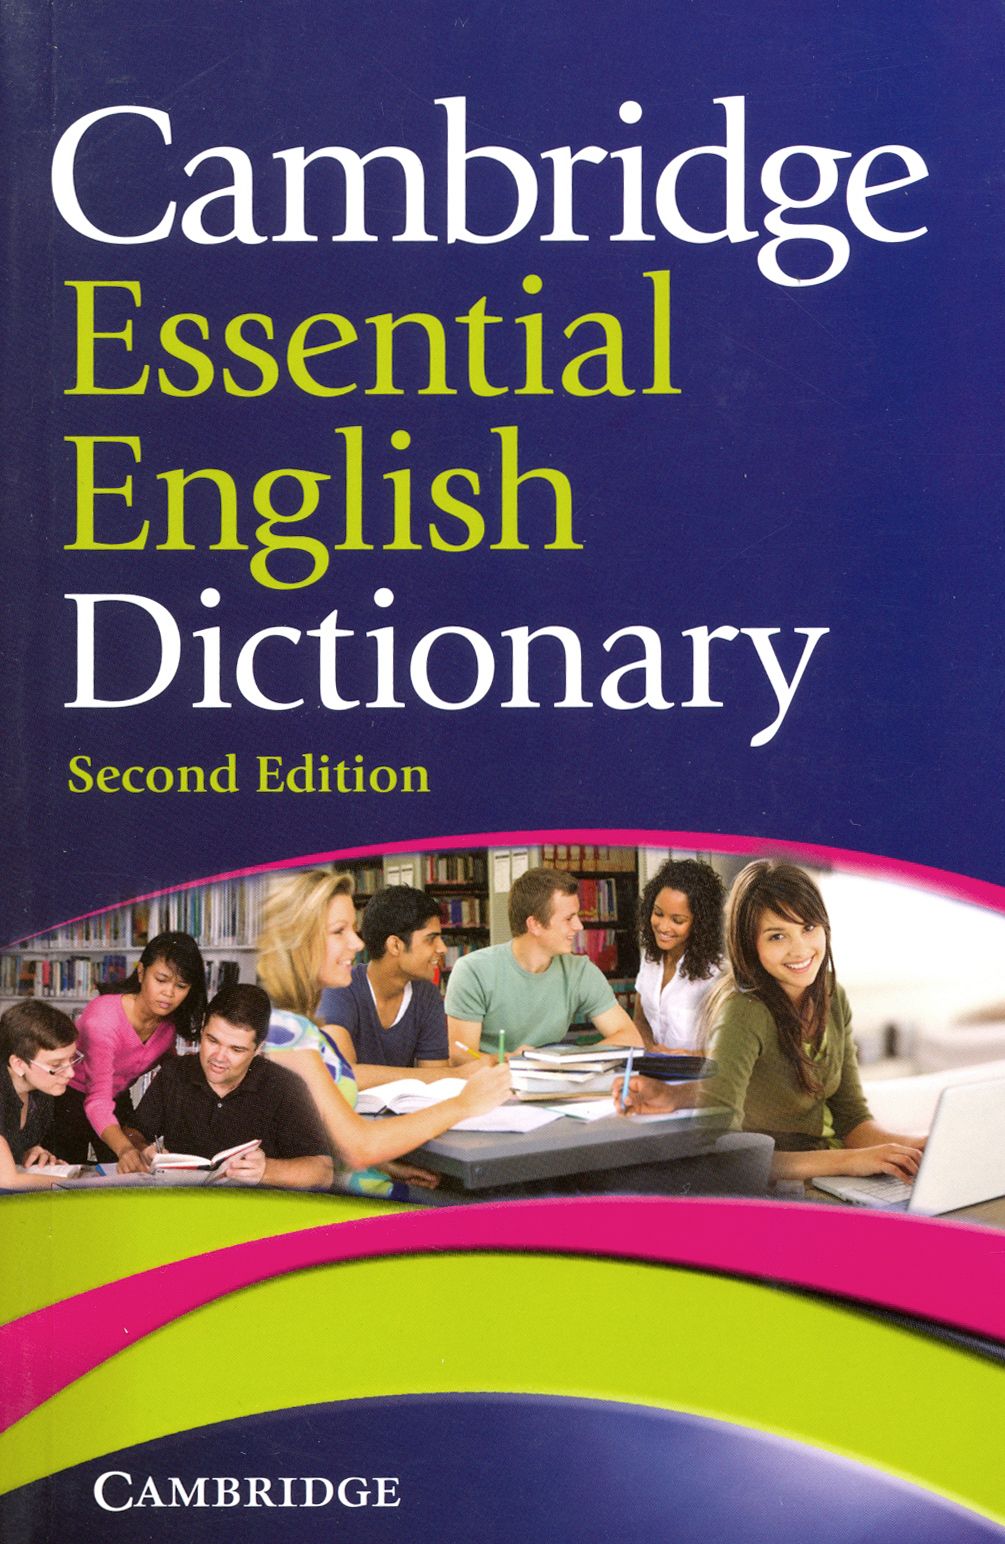 Two dictionary. Cambridge Dictionary. Словарь Cambridge. Cambridge Essential English Dictionary. Английский Cambridge.